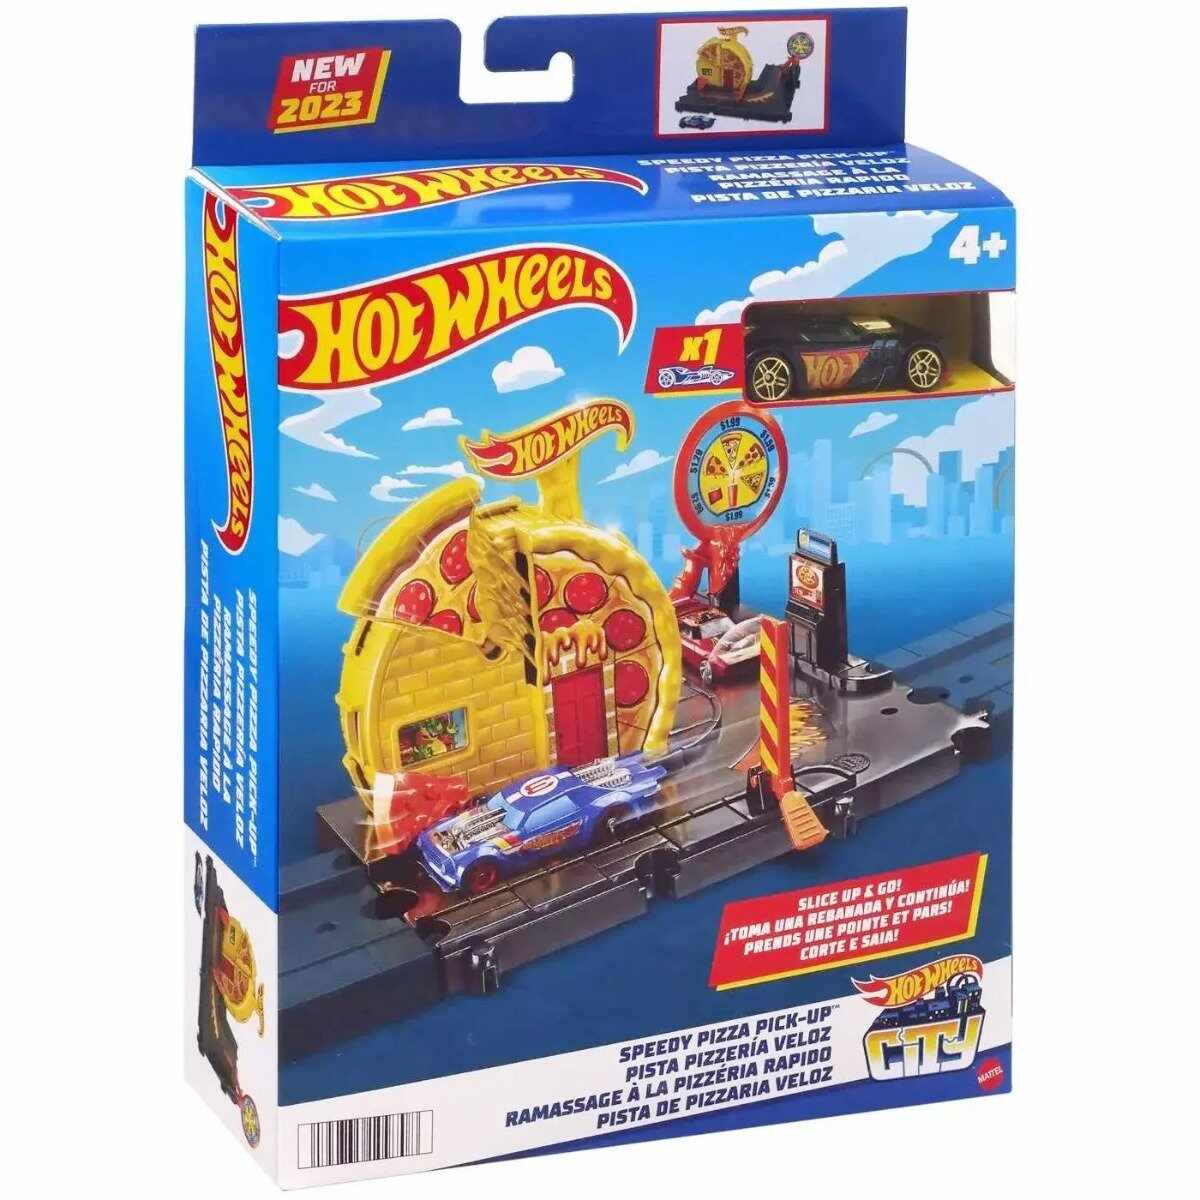 Set de joaca cu masinuta, Hot Wheels, Speedy Pizza Pick-Up, HKX44